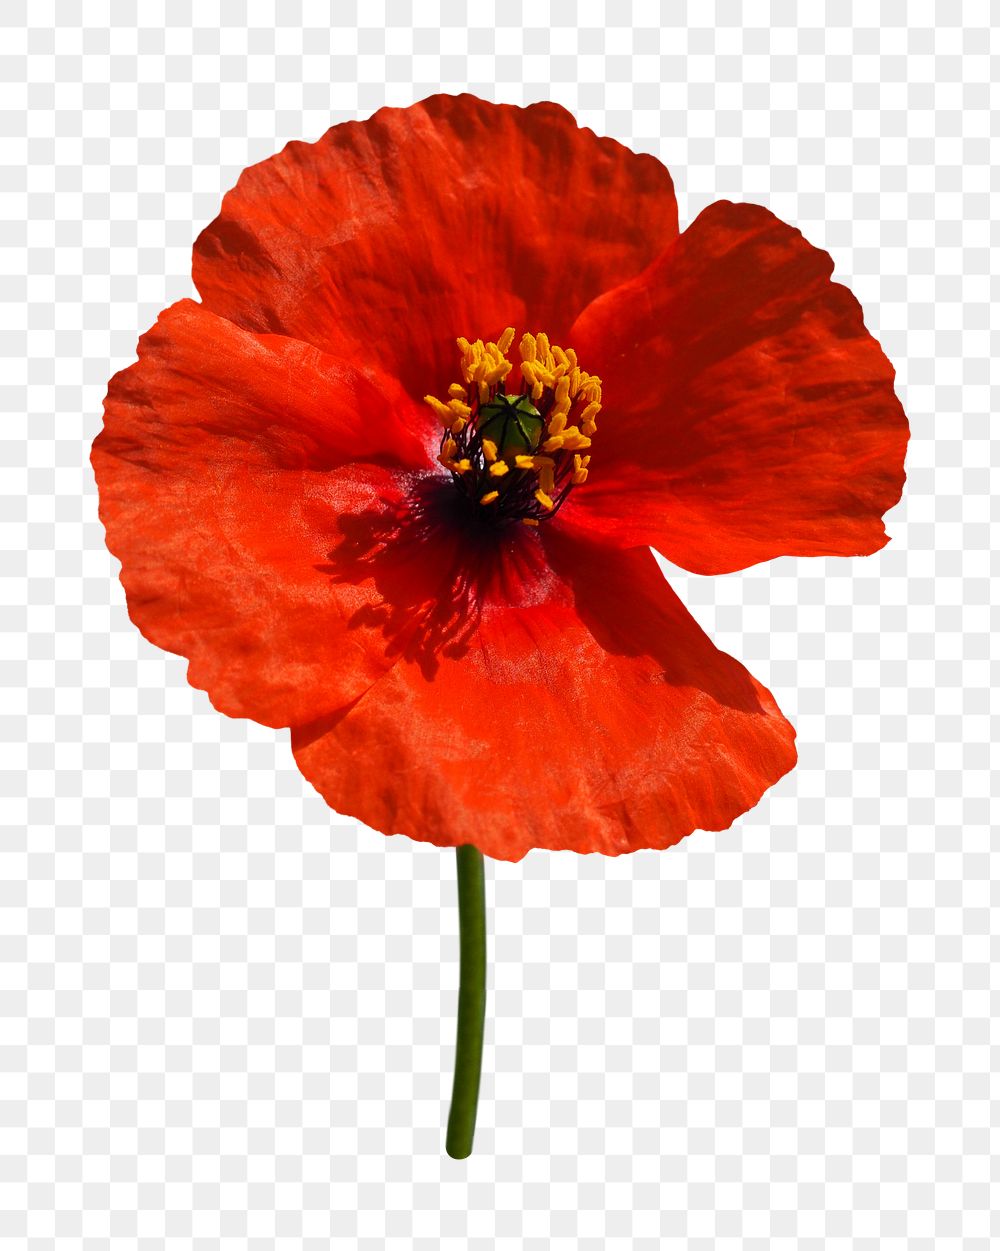 Red poppy flower png sticker, transparent background